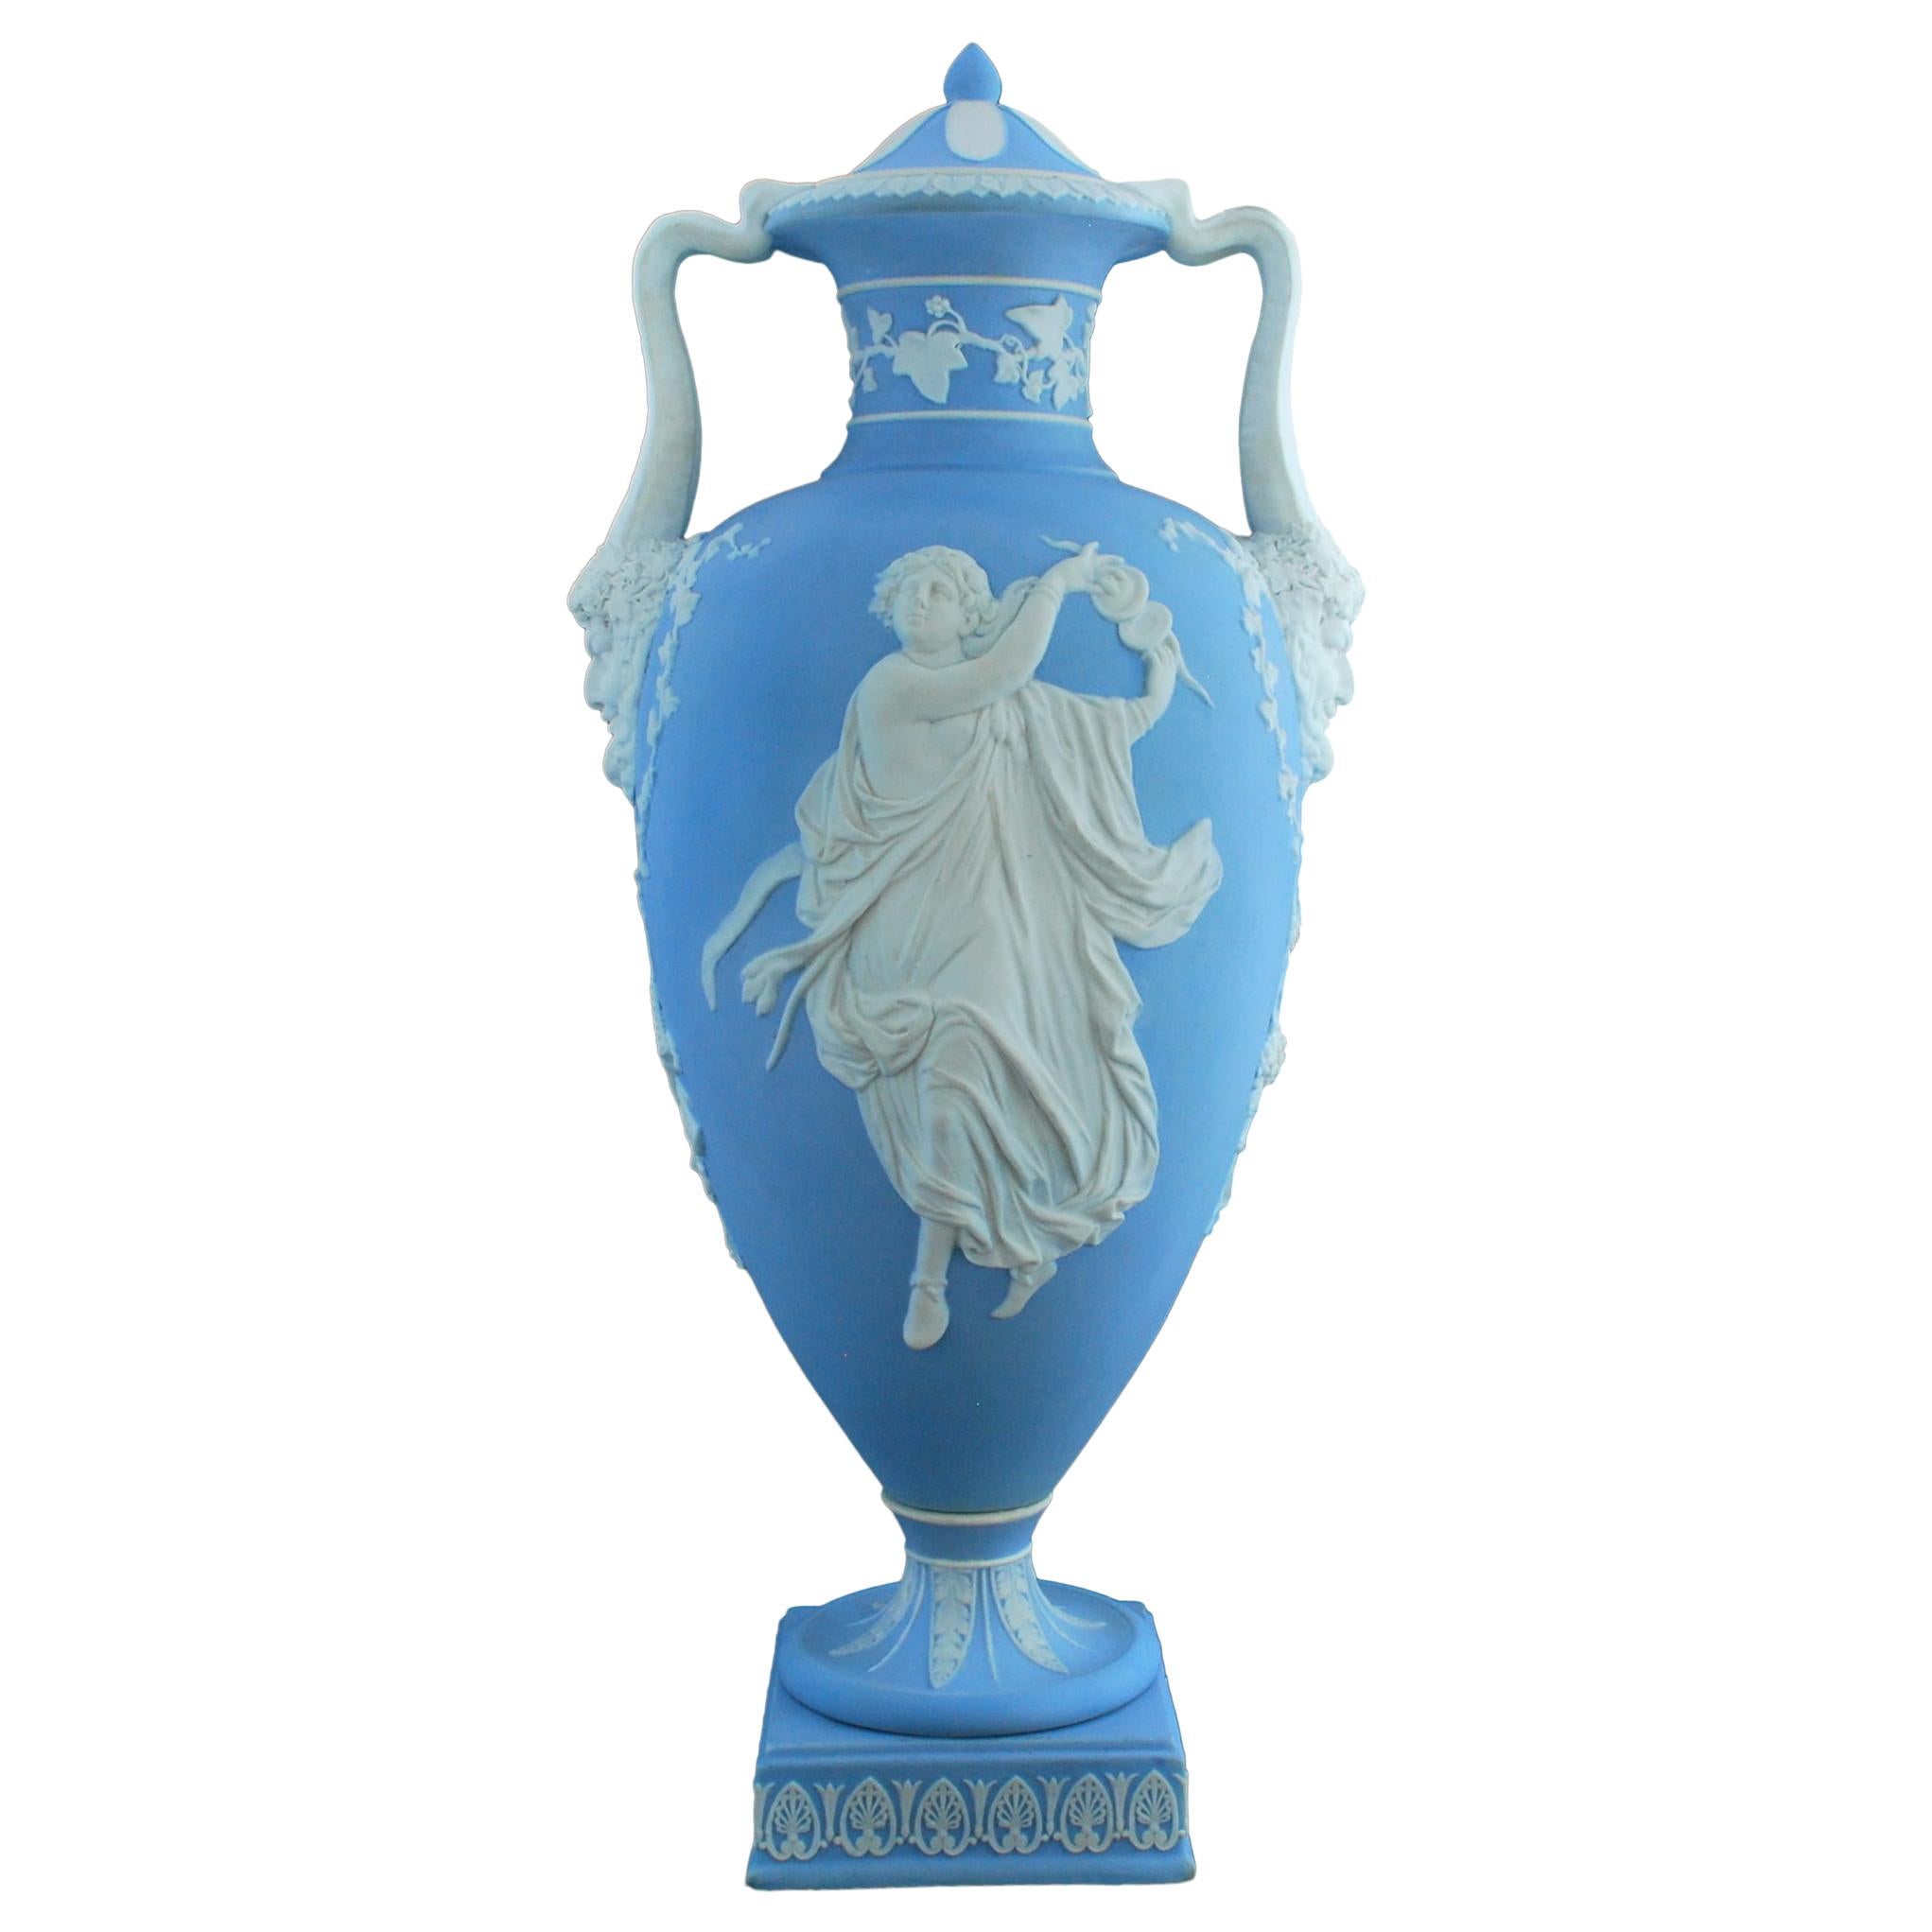 Monumental Jasperware Vase, Wedgwood, circa 1860